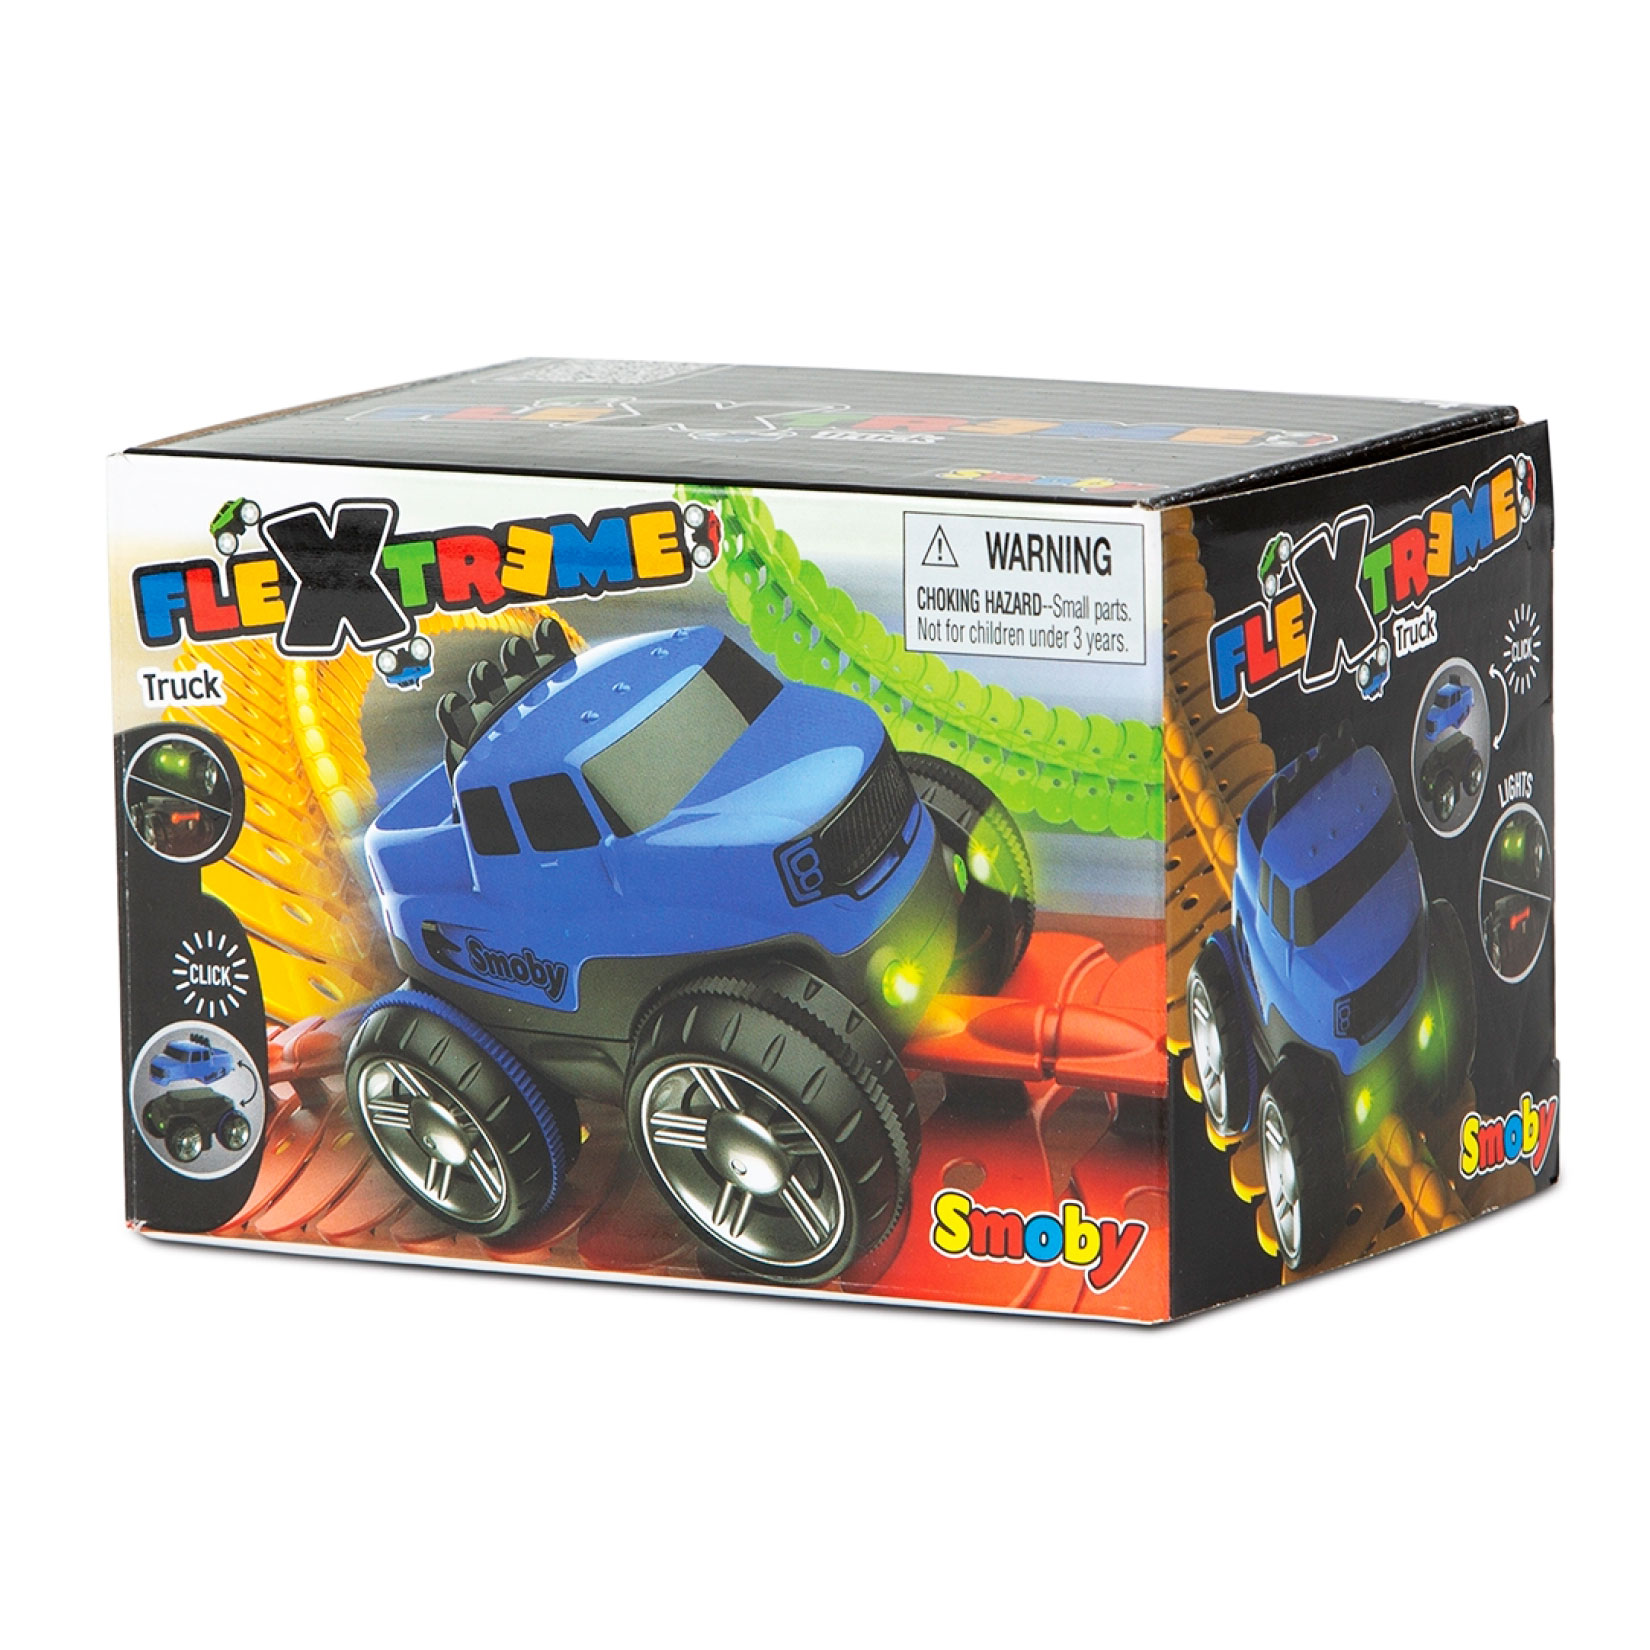 Іграшкова машинка до треку Smoby FleXtreme 10 х 7.5 х 6.5 см Blue (IG-OL185815)